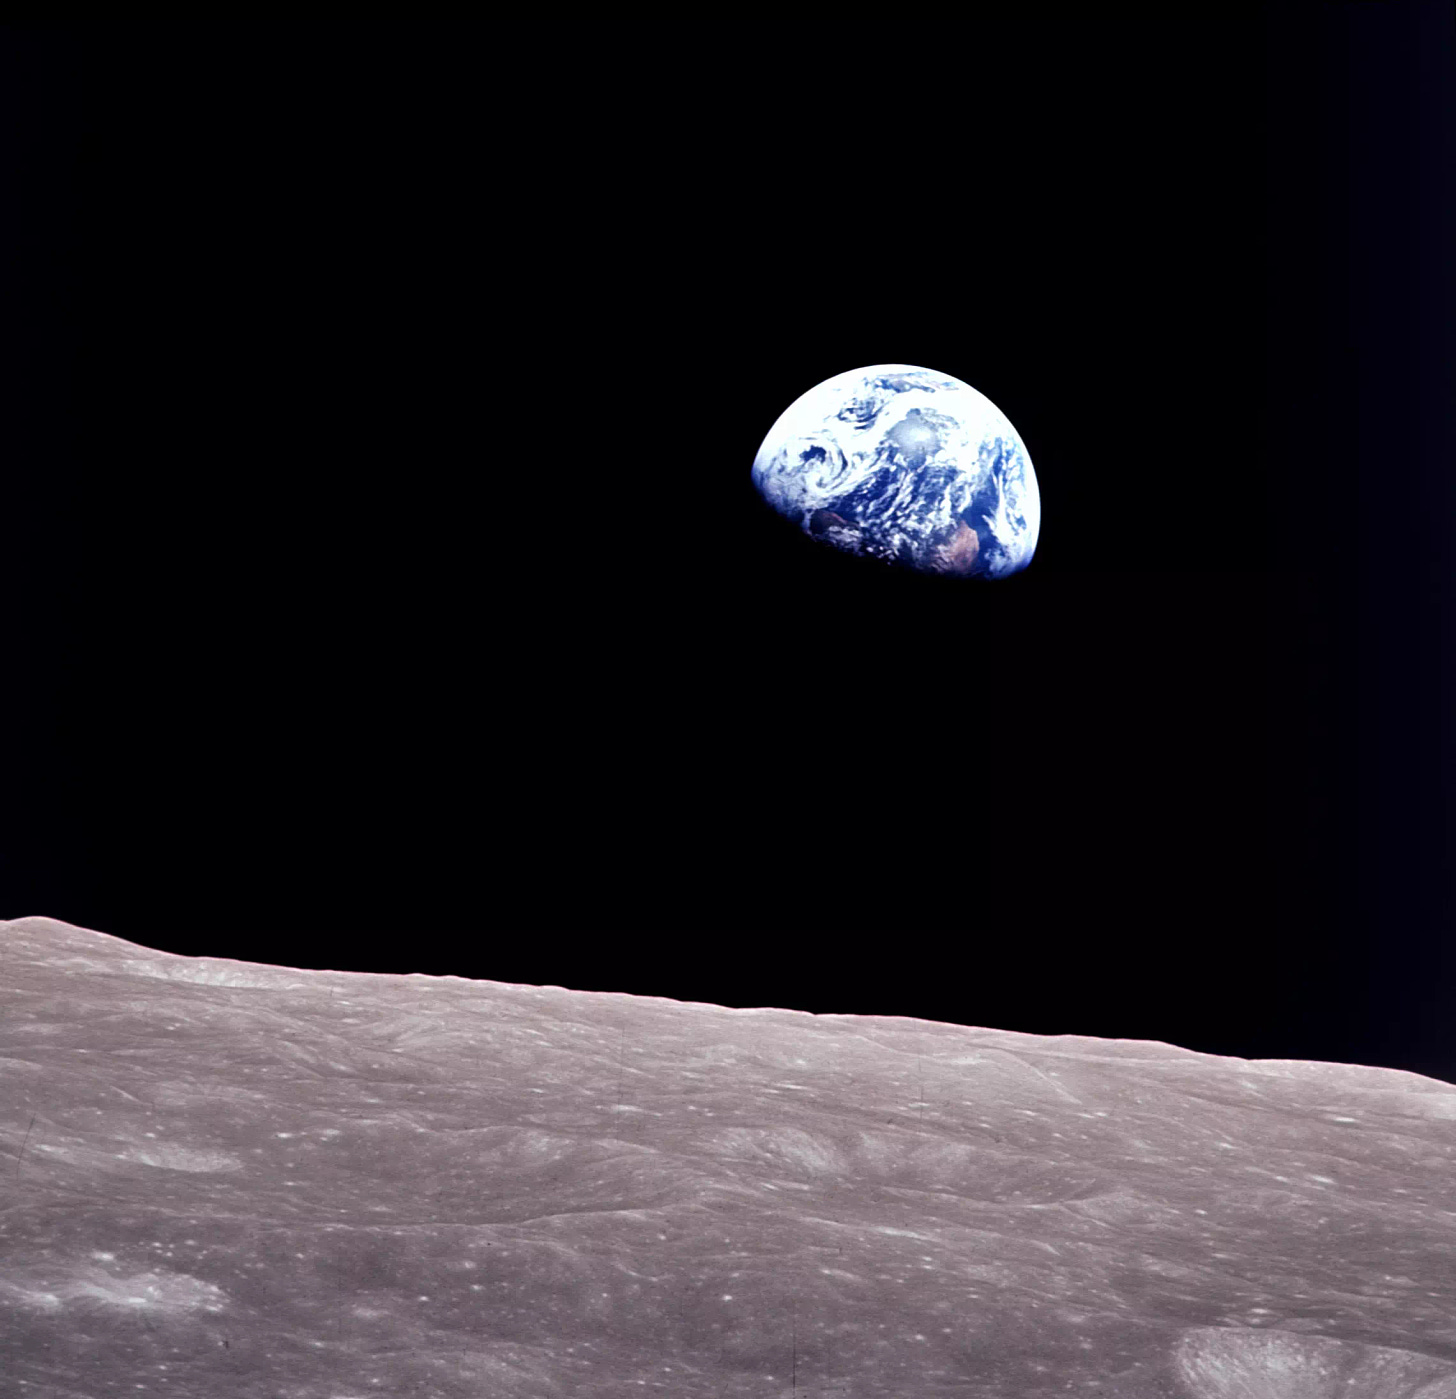 Earthrise, Apollo 8 mission photo, credit NASA